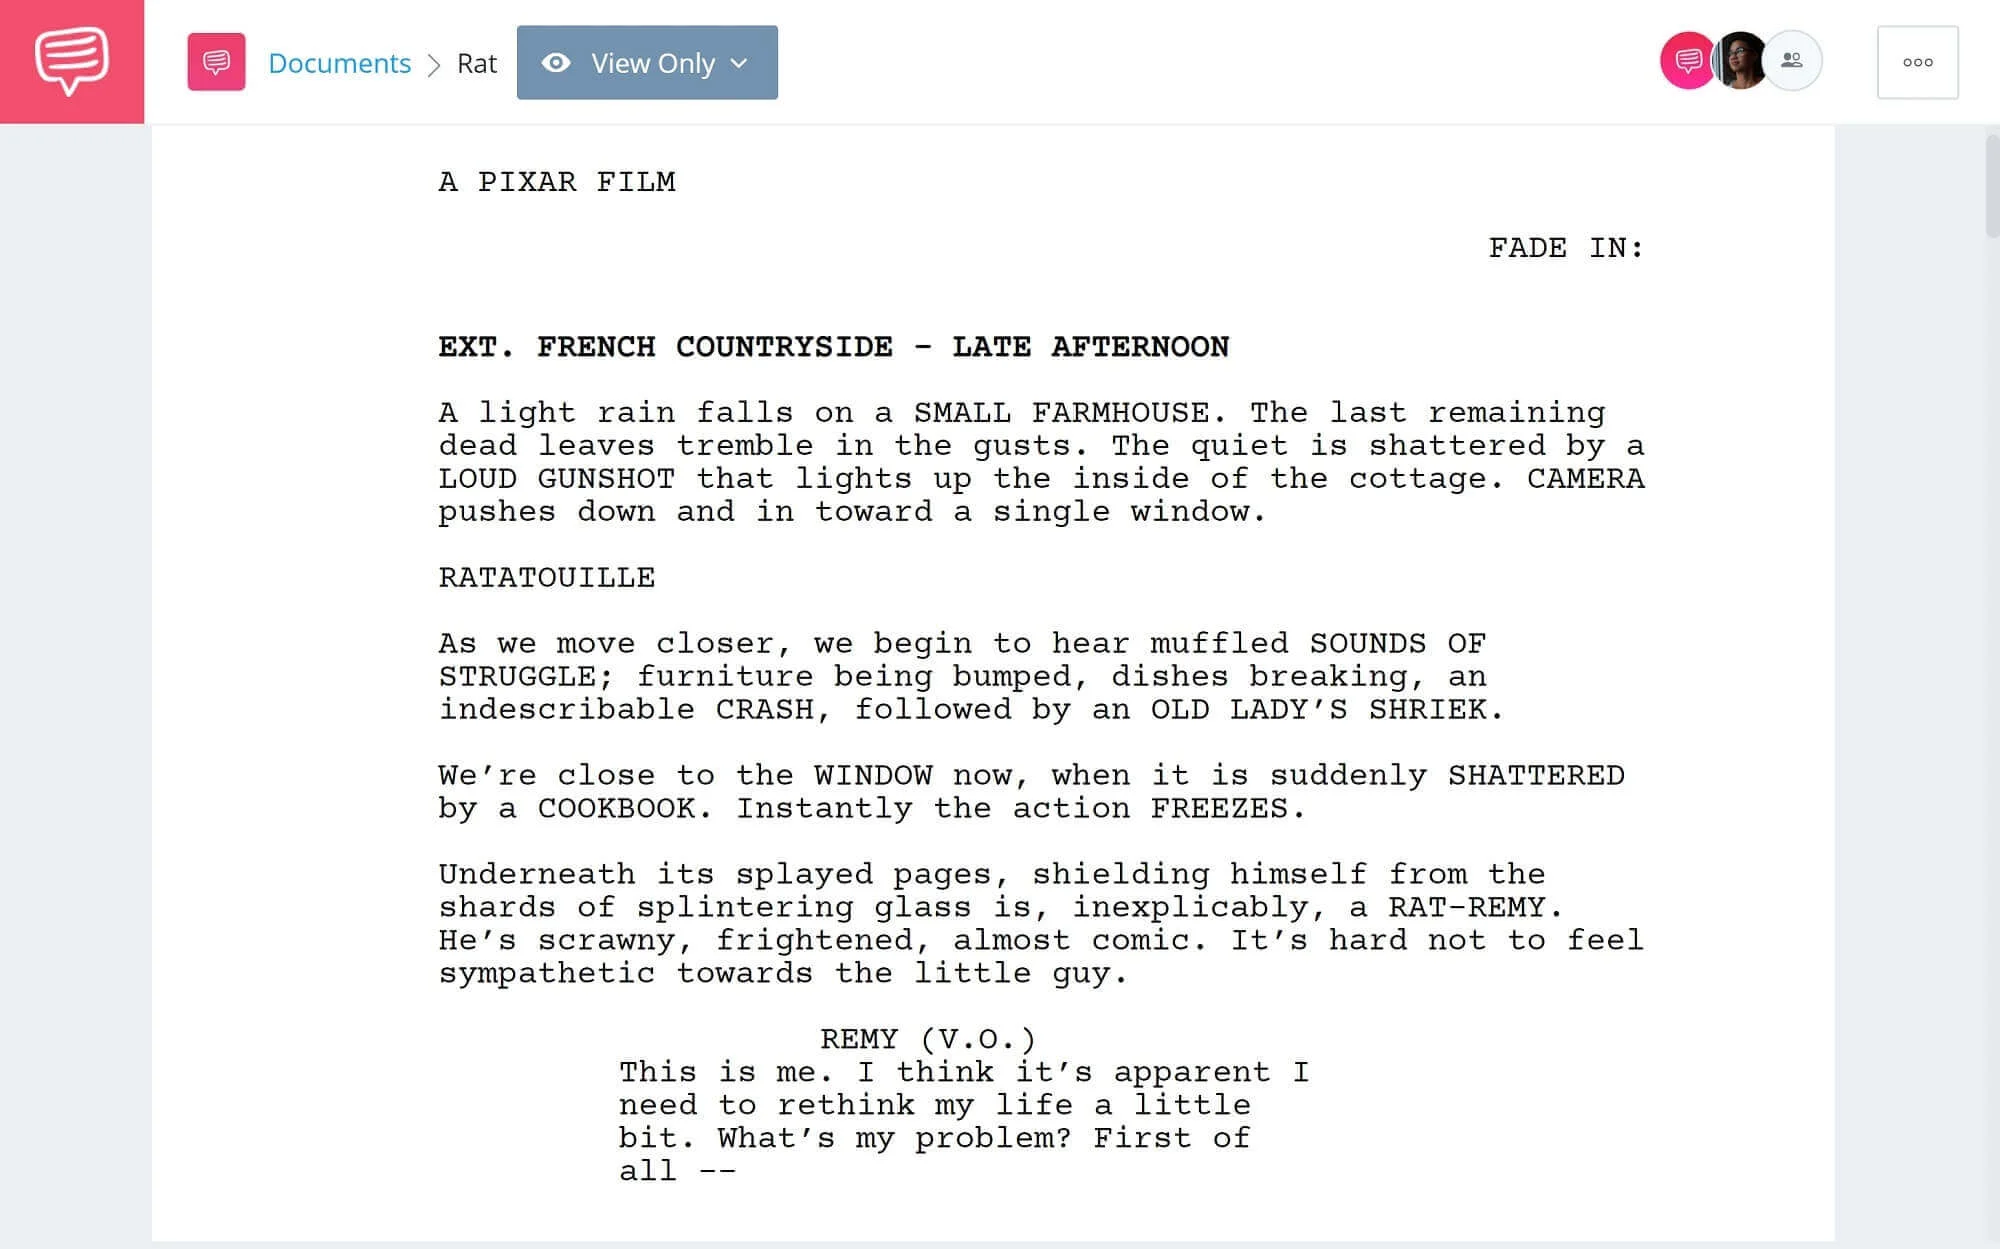 Ratatouille Script PDF Download: Plot, Characters, and Ending